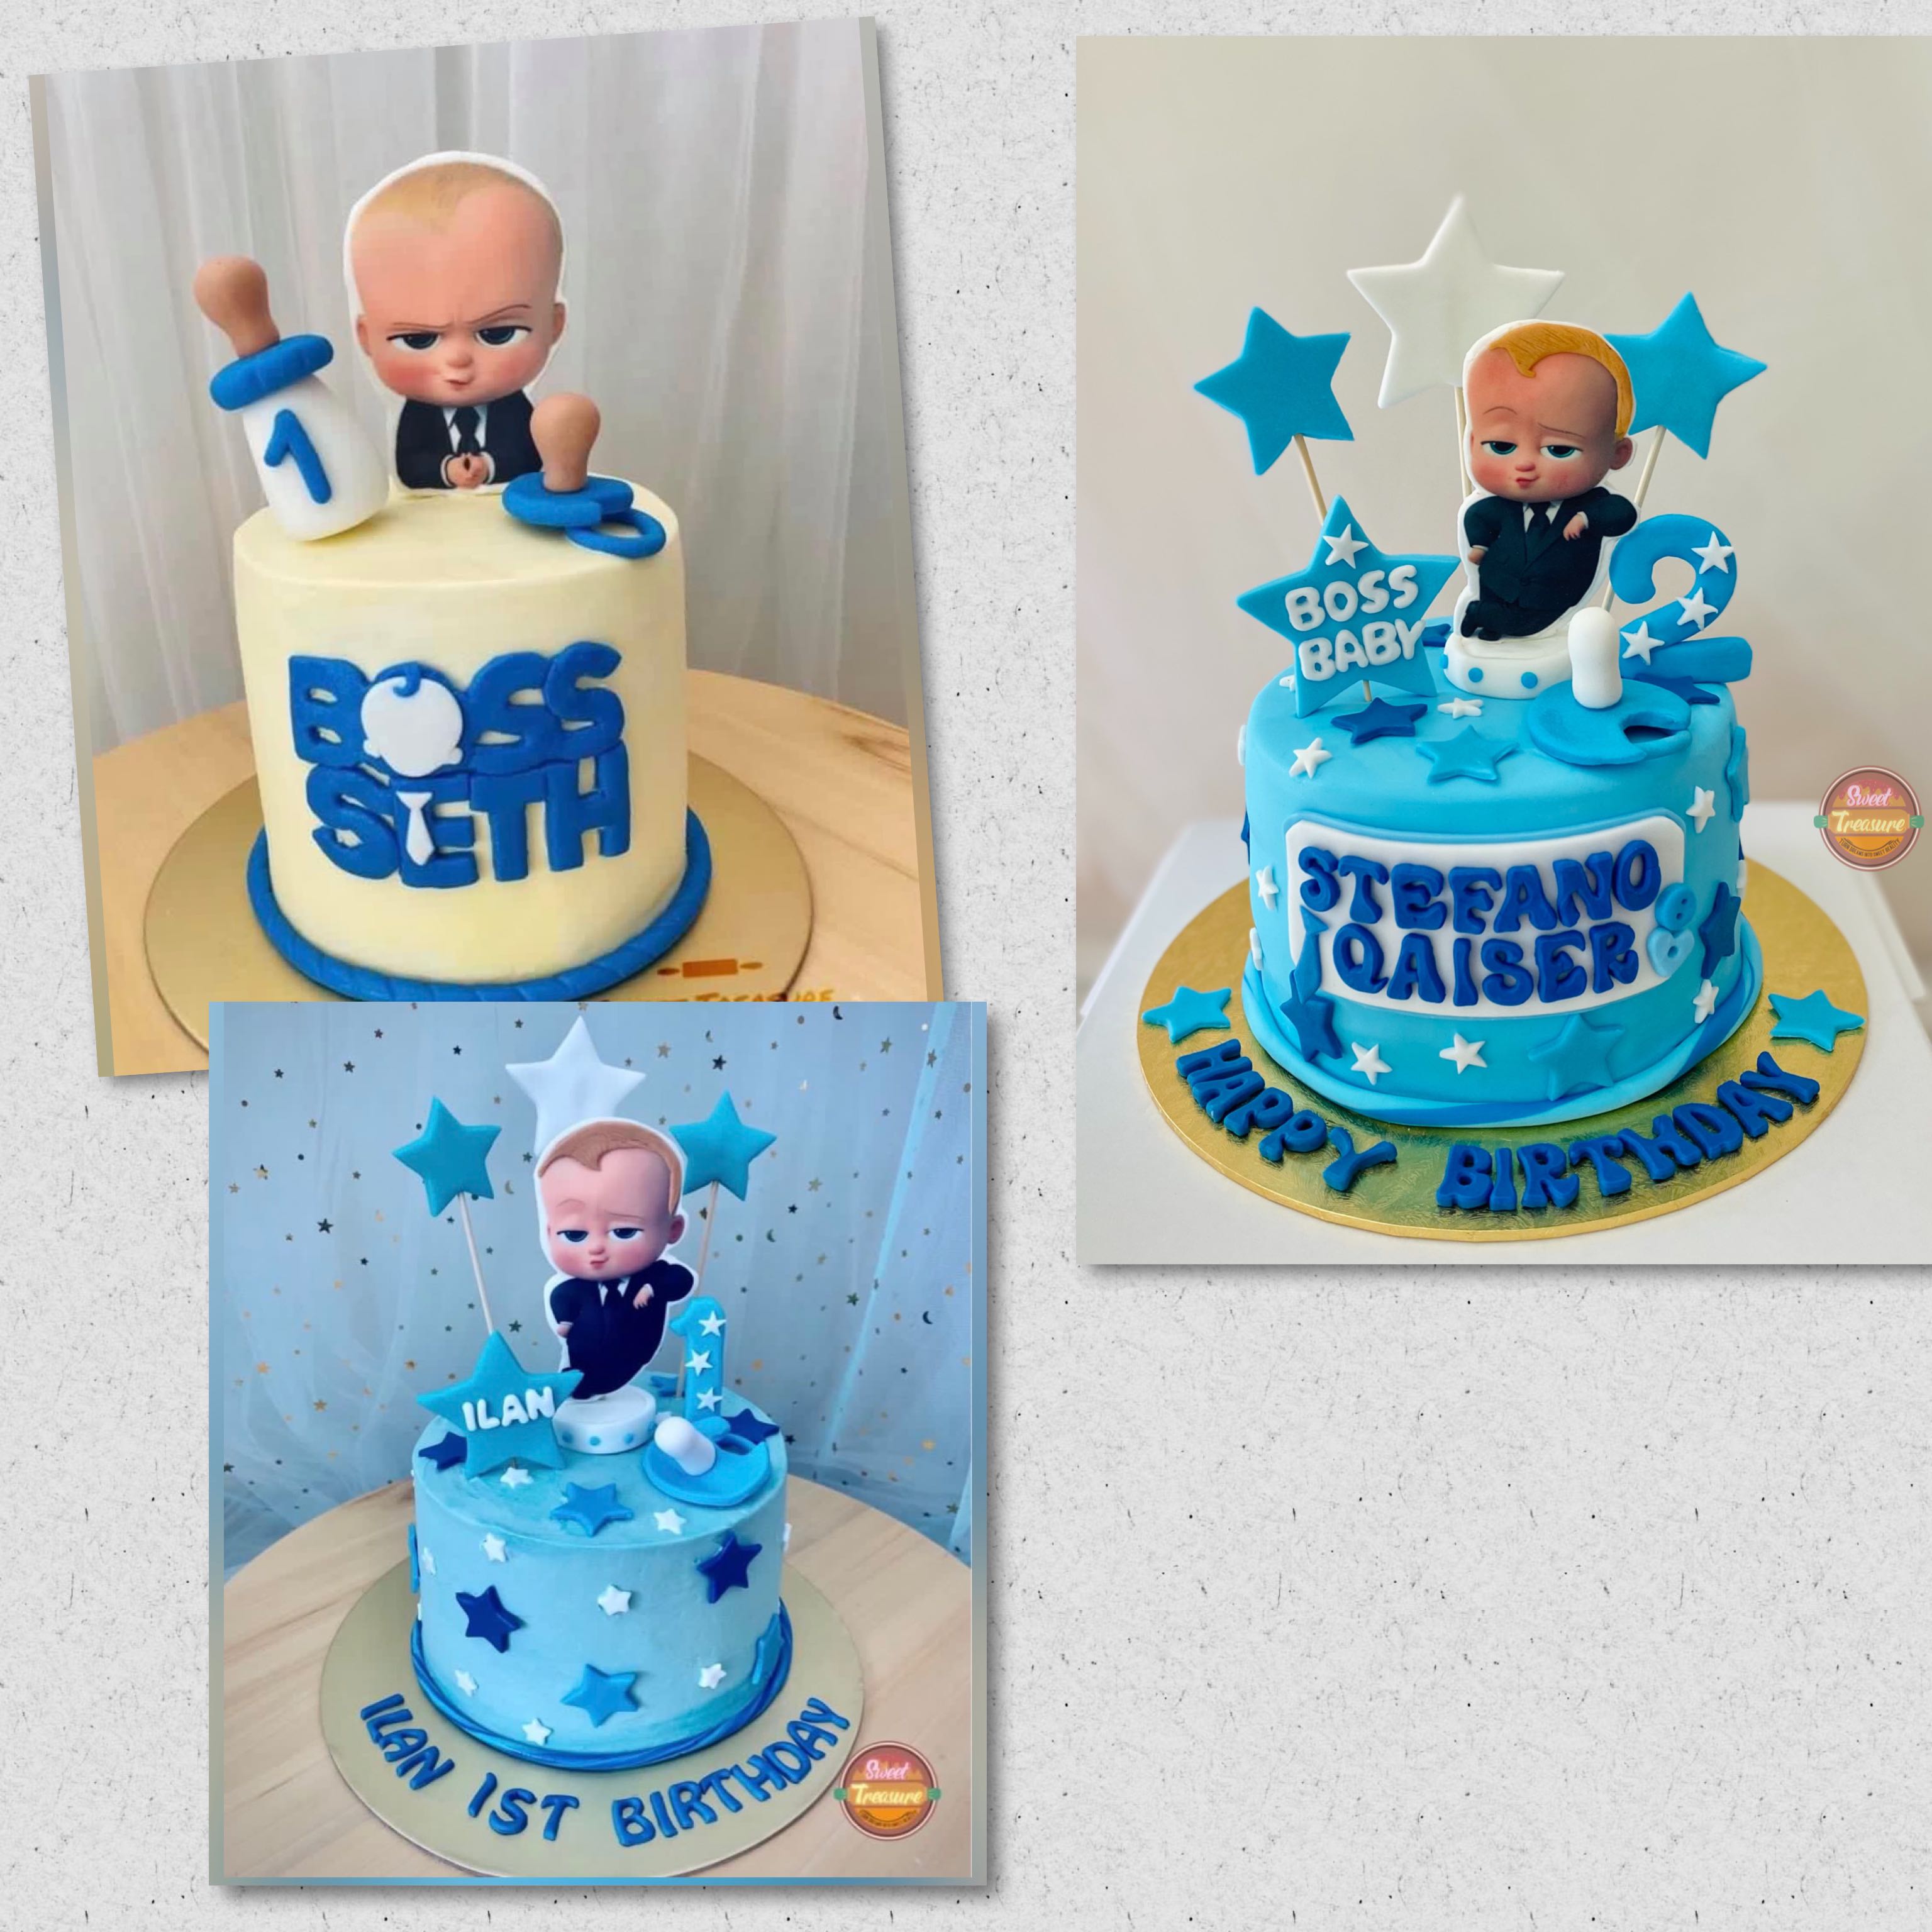 Boss Baby Suspender Cake - | Baby 1 year old cake